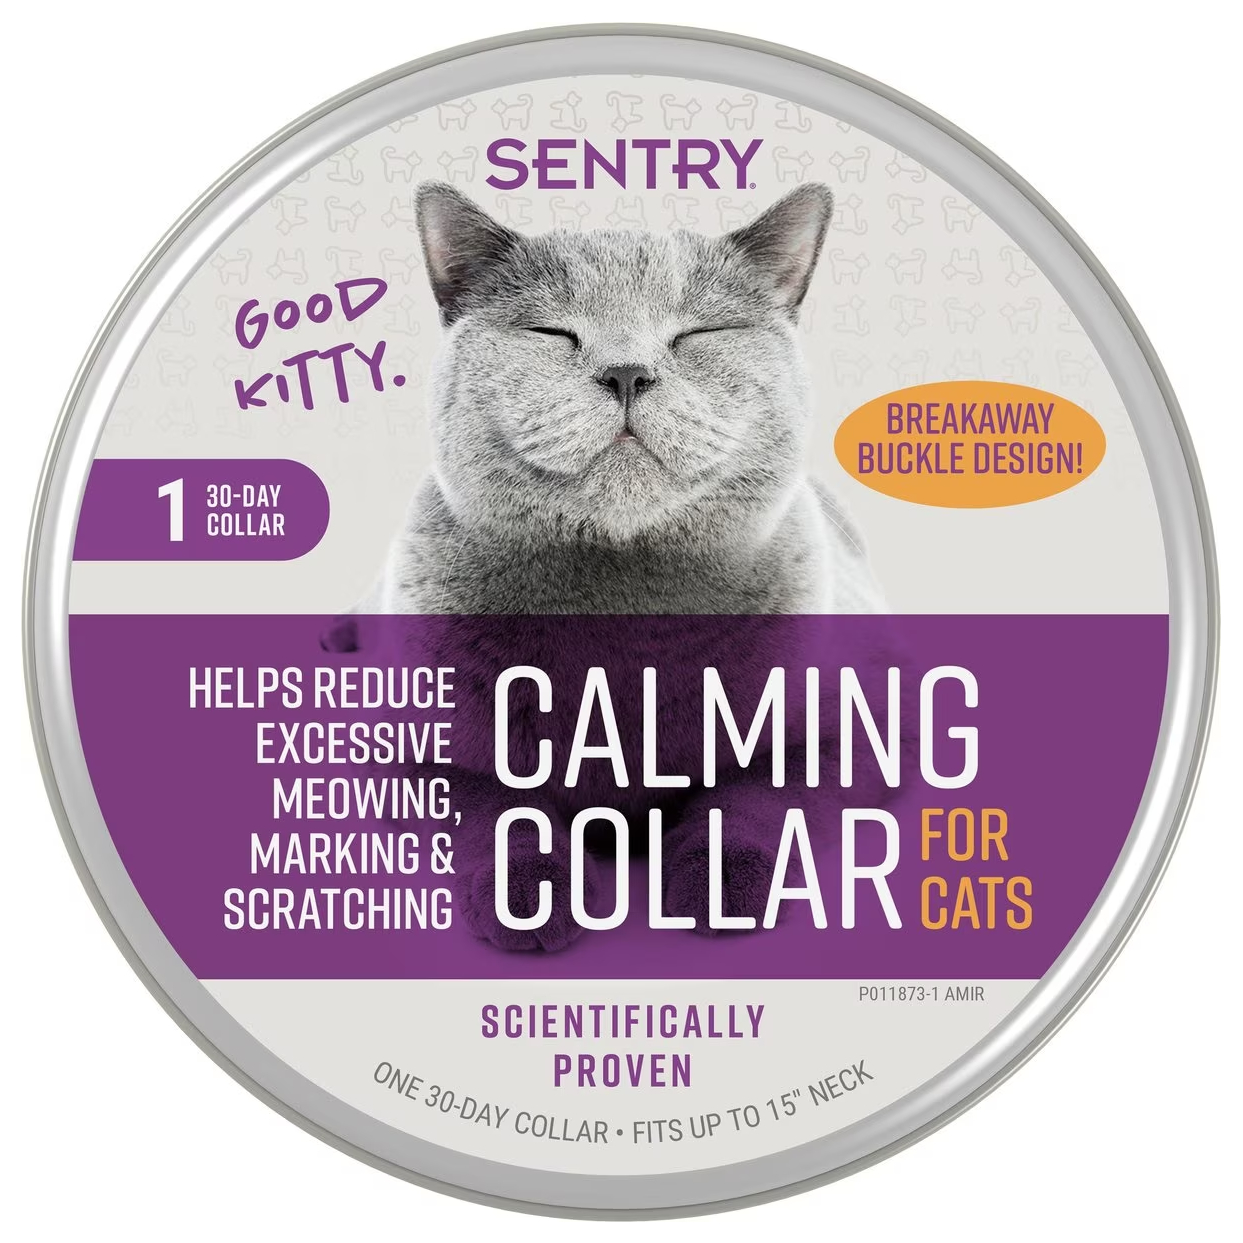 Sentry Good Behavior Calming Collar for Cats